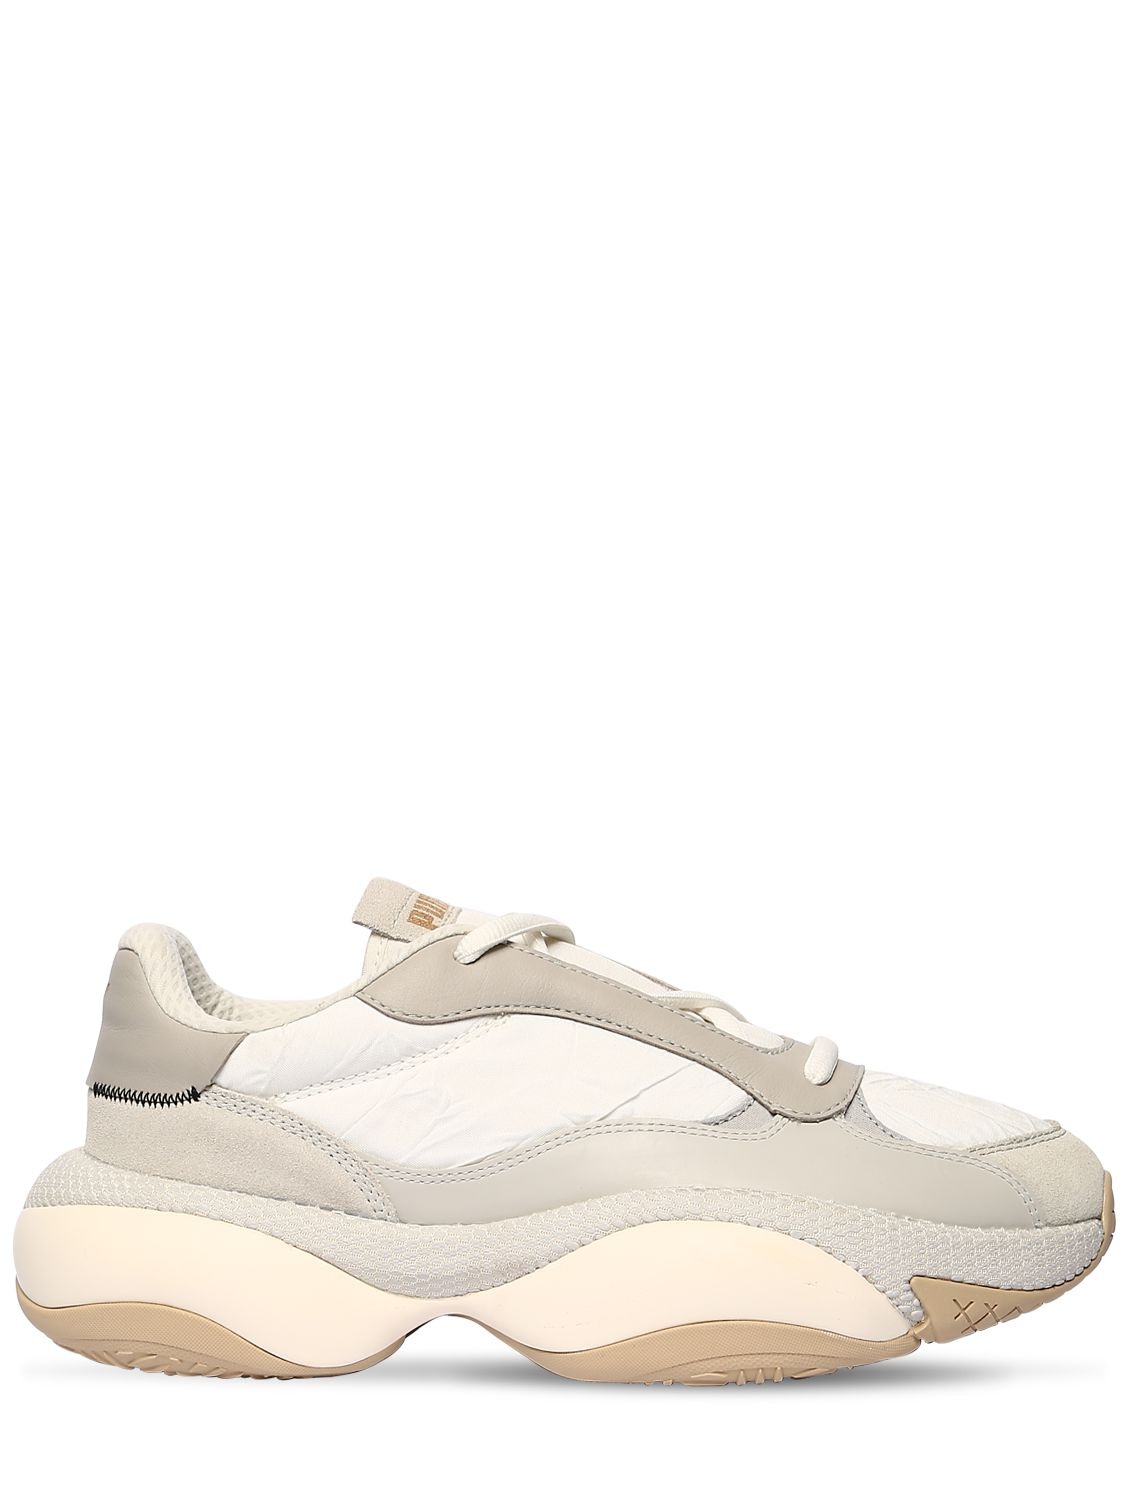 Puma Alteration Sneakers In White